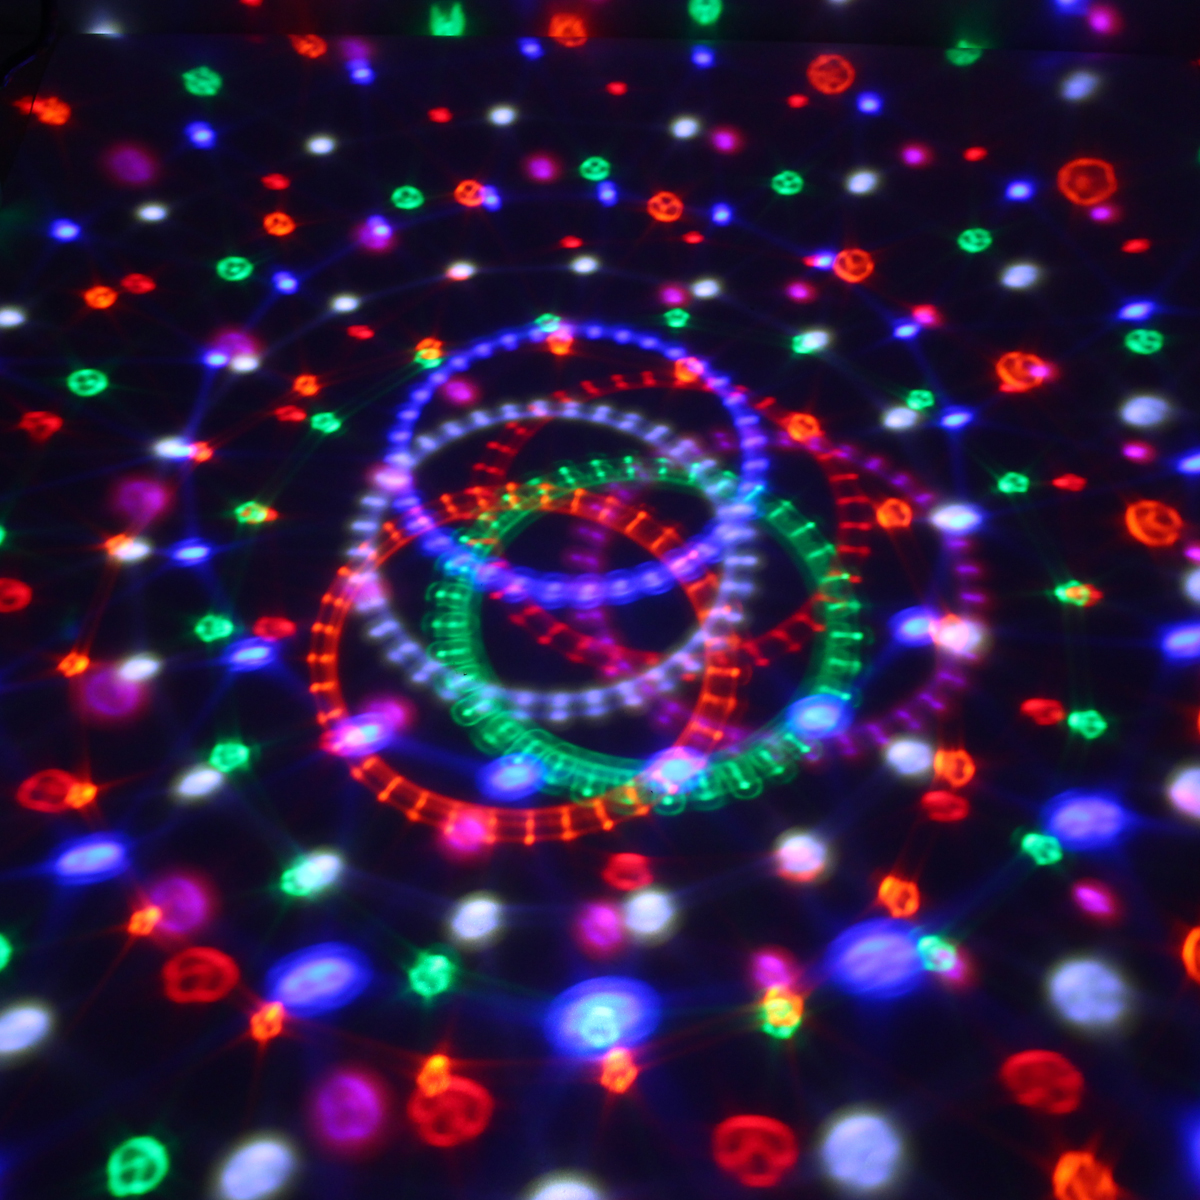 18W Crystal Ball Magic RGB LED Stage Light Remote Control MP3 DJ Club Pub Disco Party Lamp AC100-240V